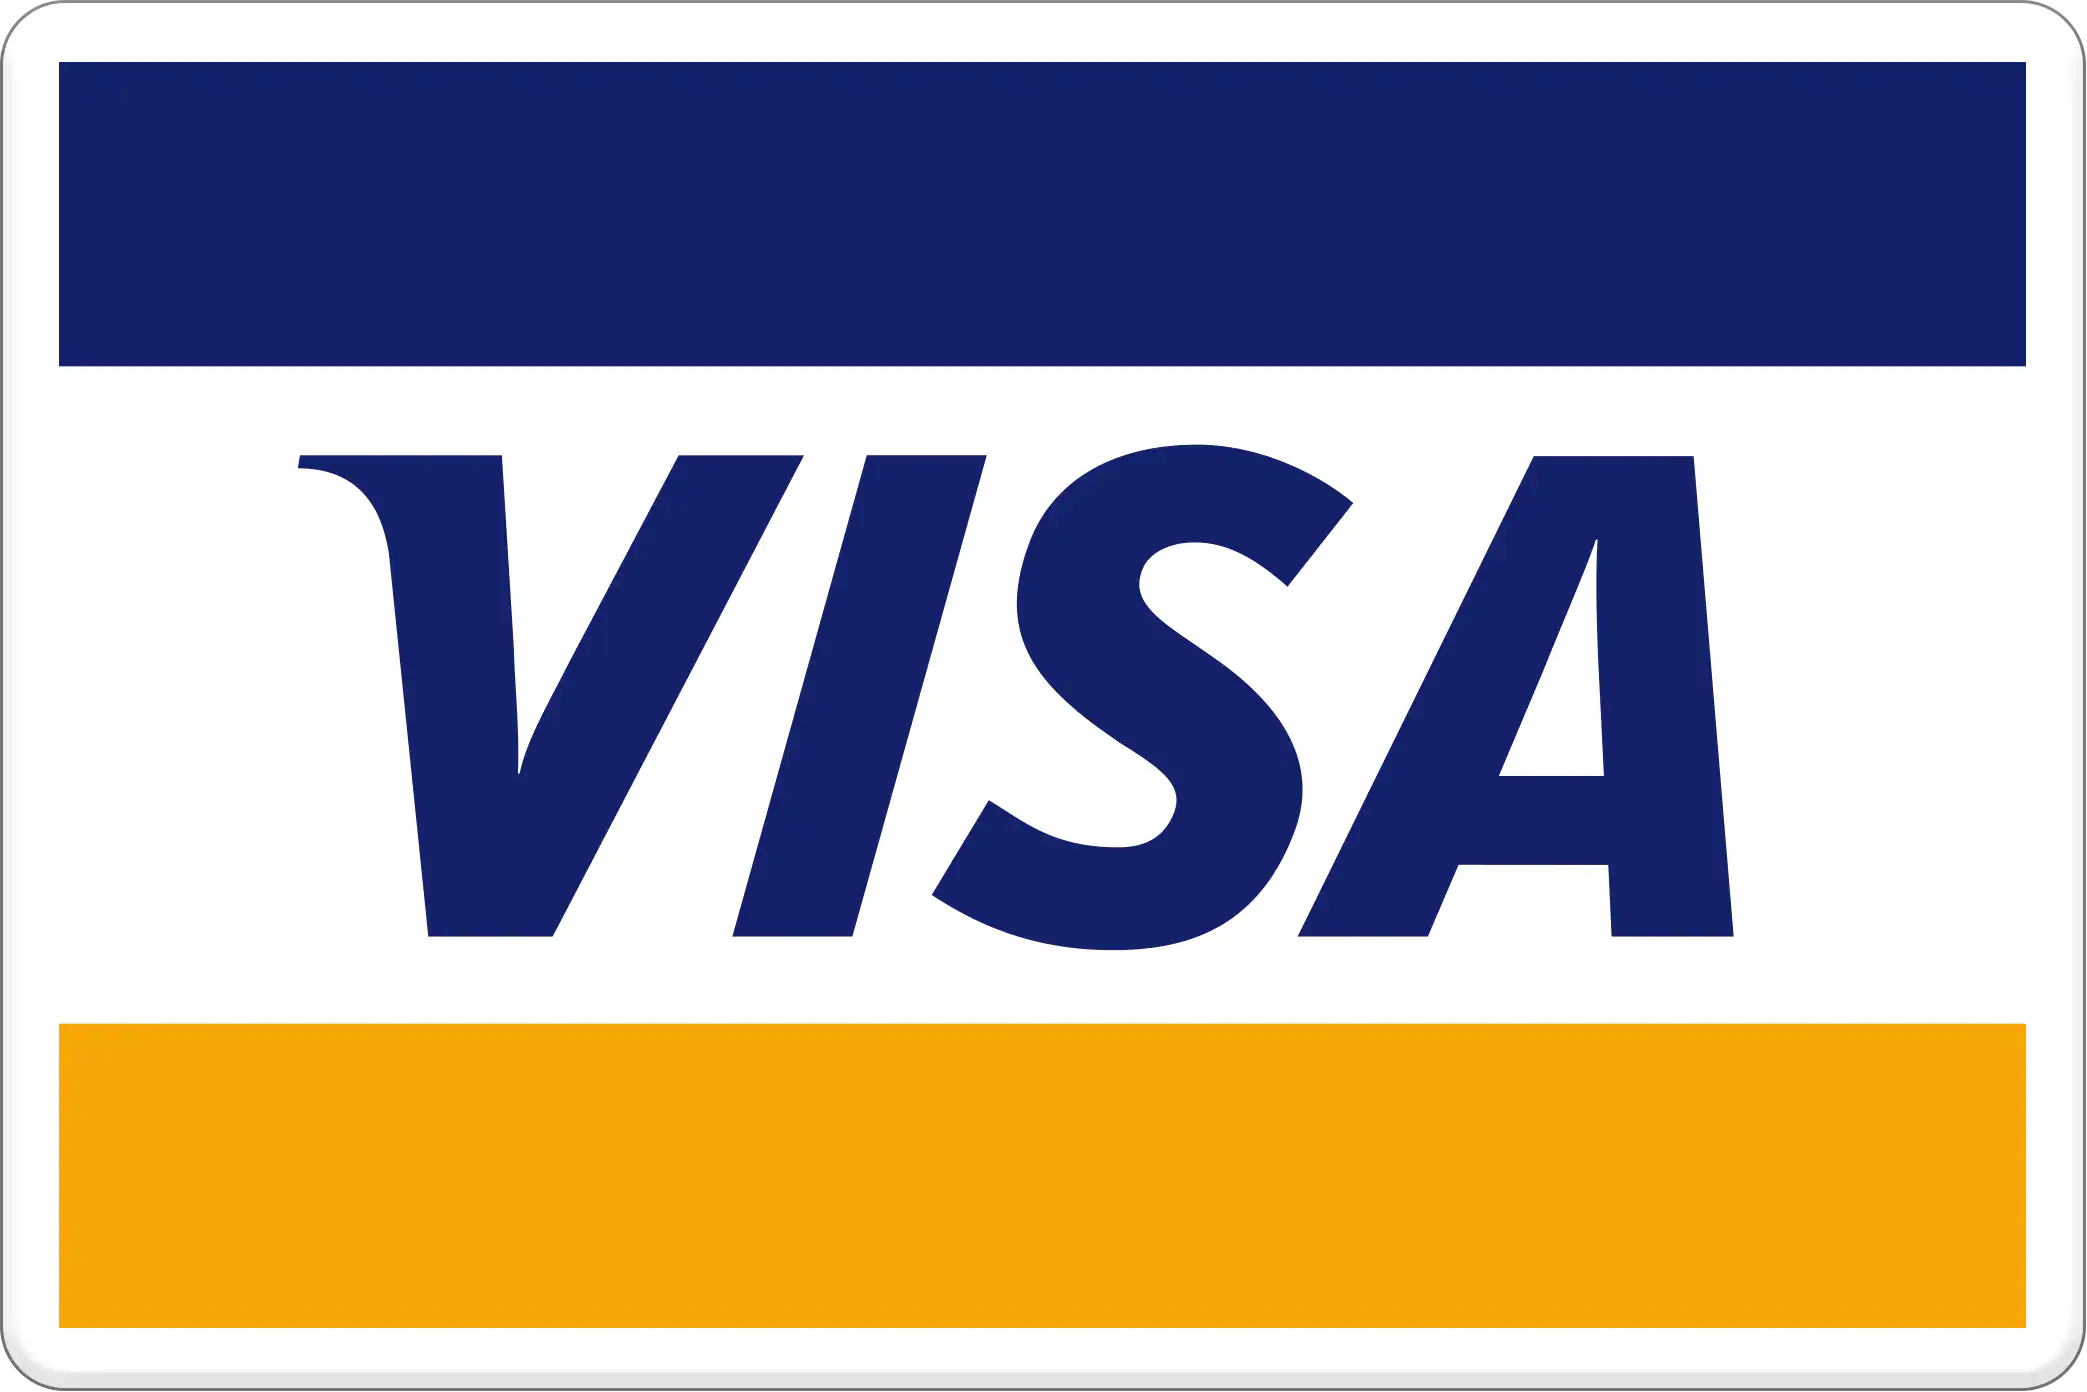 footer-visa